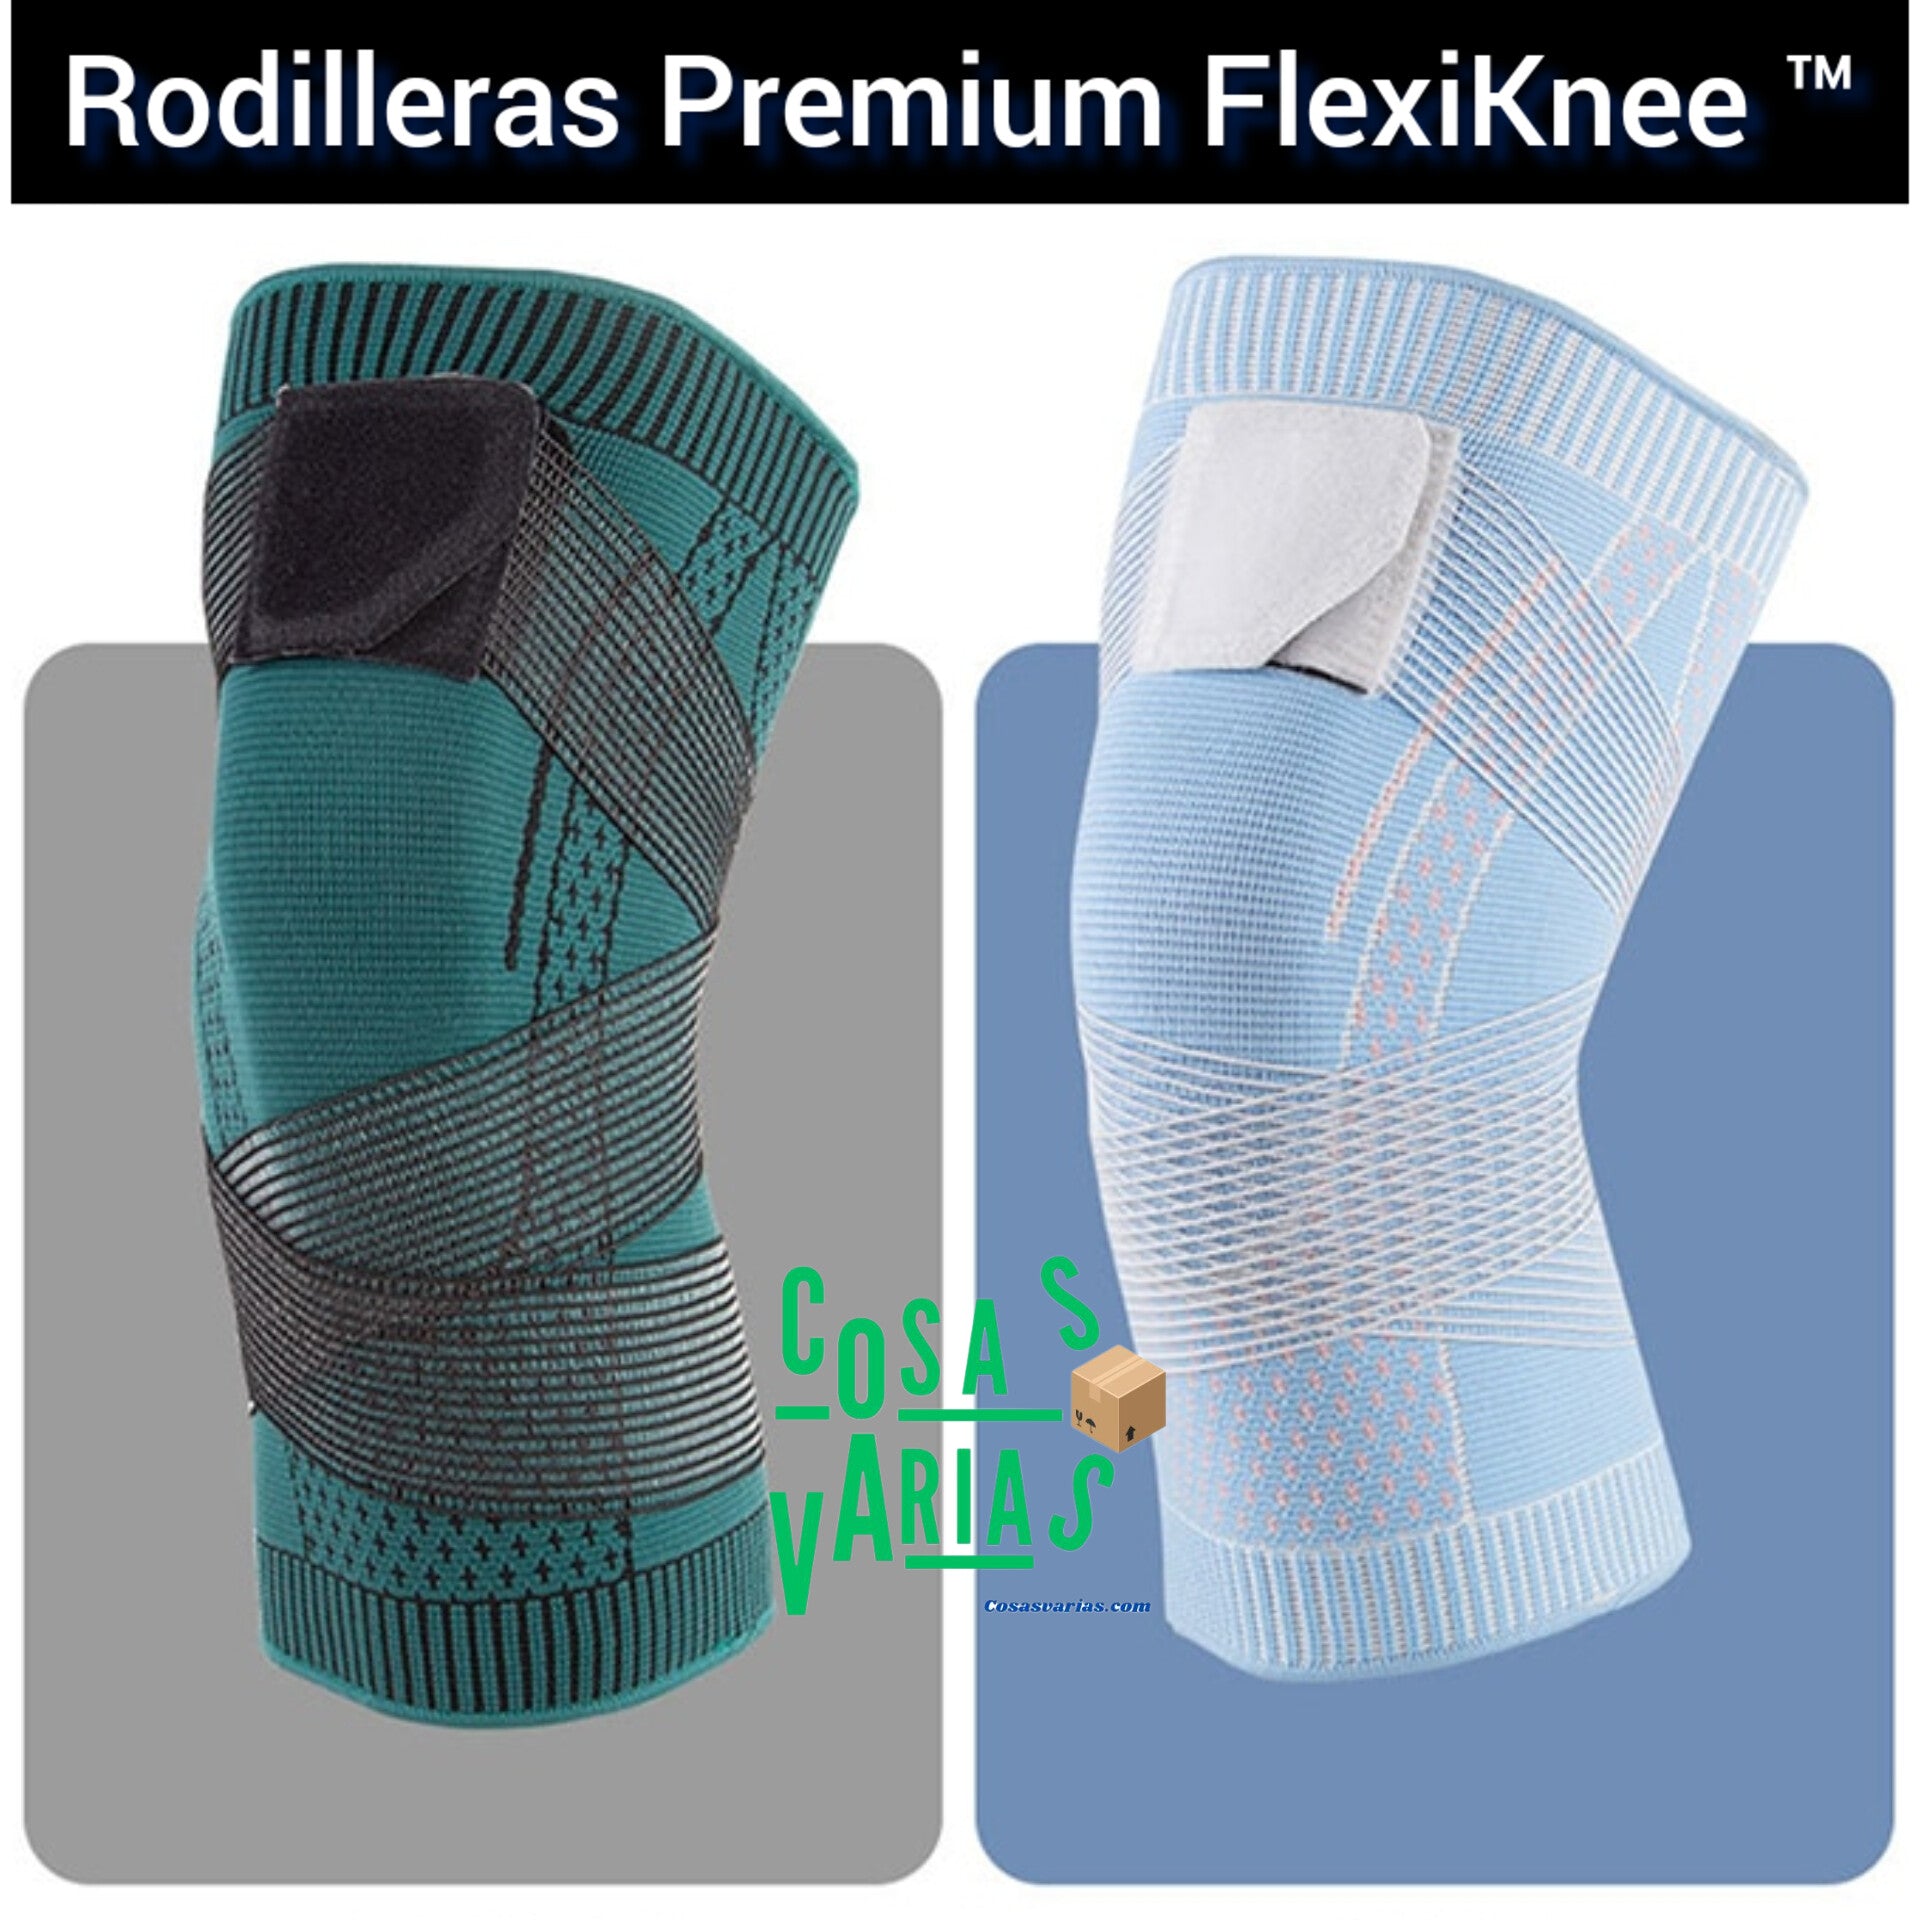 Rodilleras Premium FlexiKnee ™